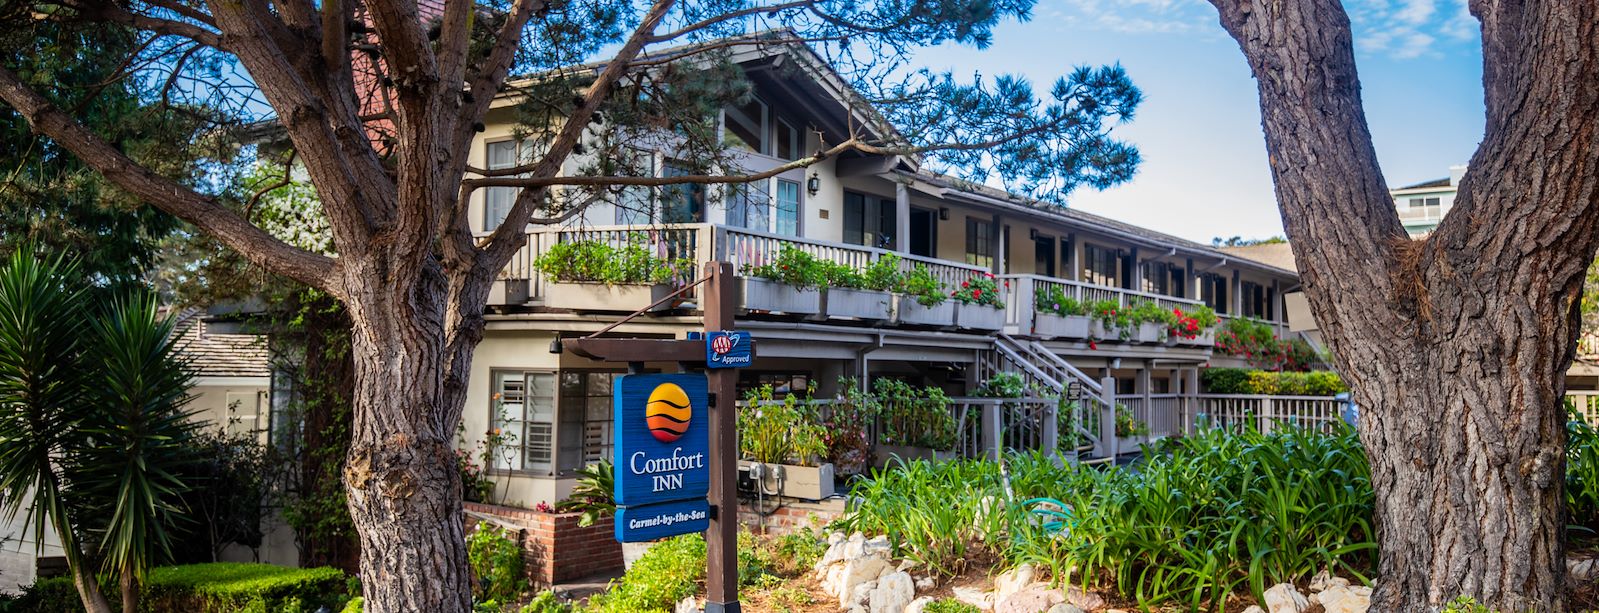 Comfort Inn Carmel by the Sea California